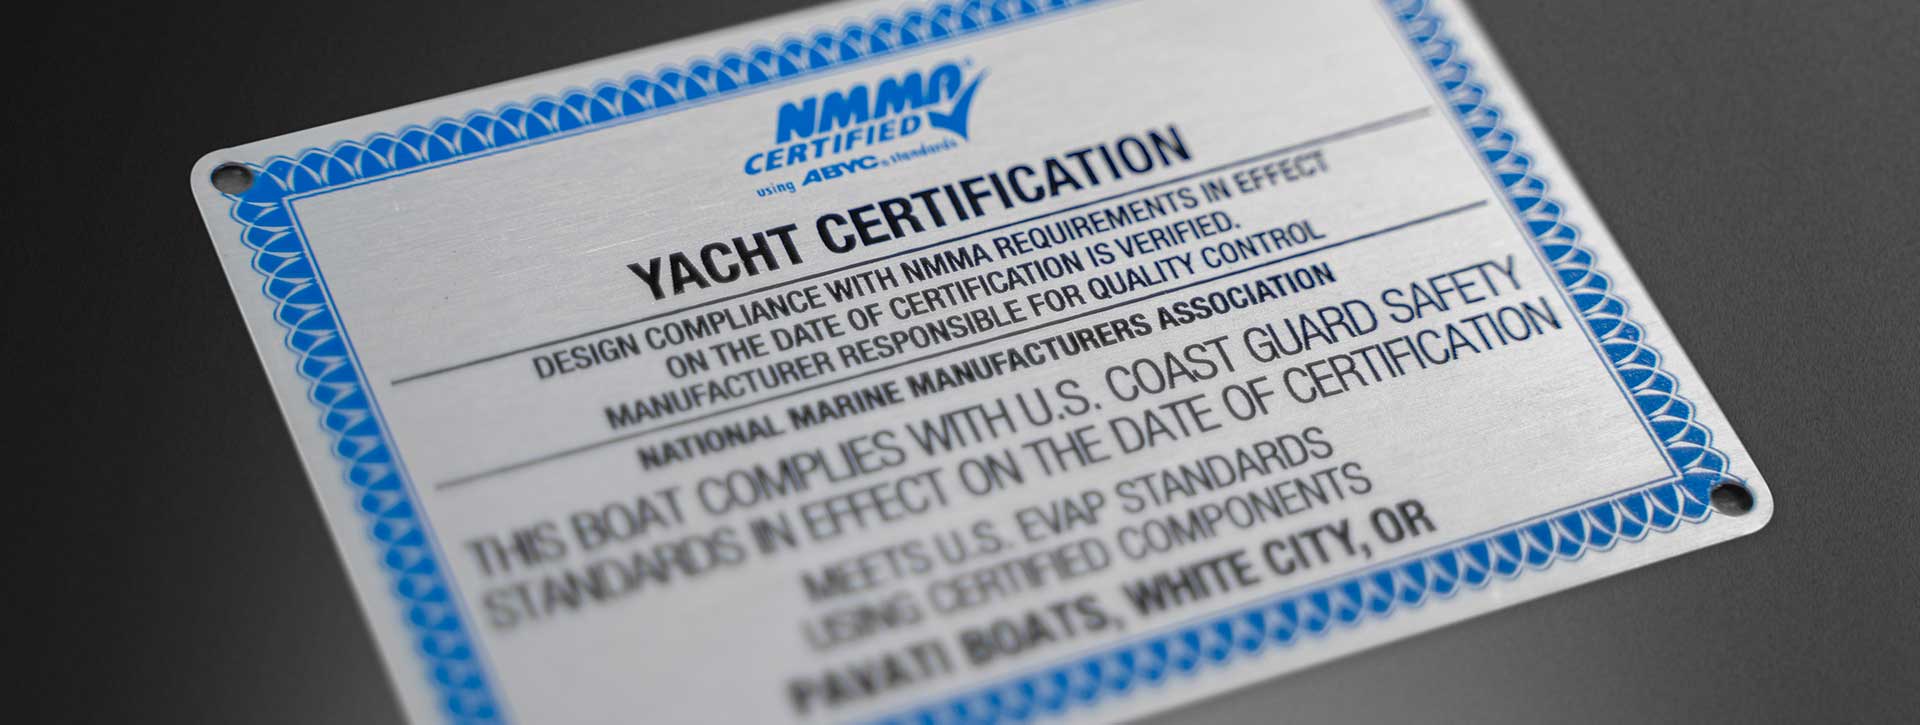 ce yacht certification definition